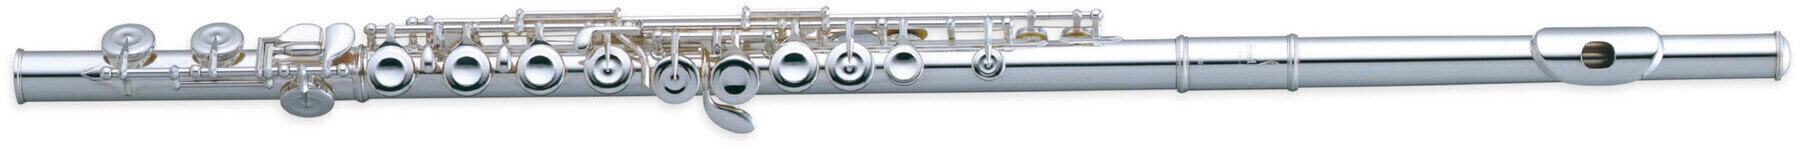 Concert flute Pearl Flute F525RE Concert flute